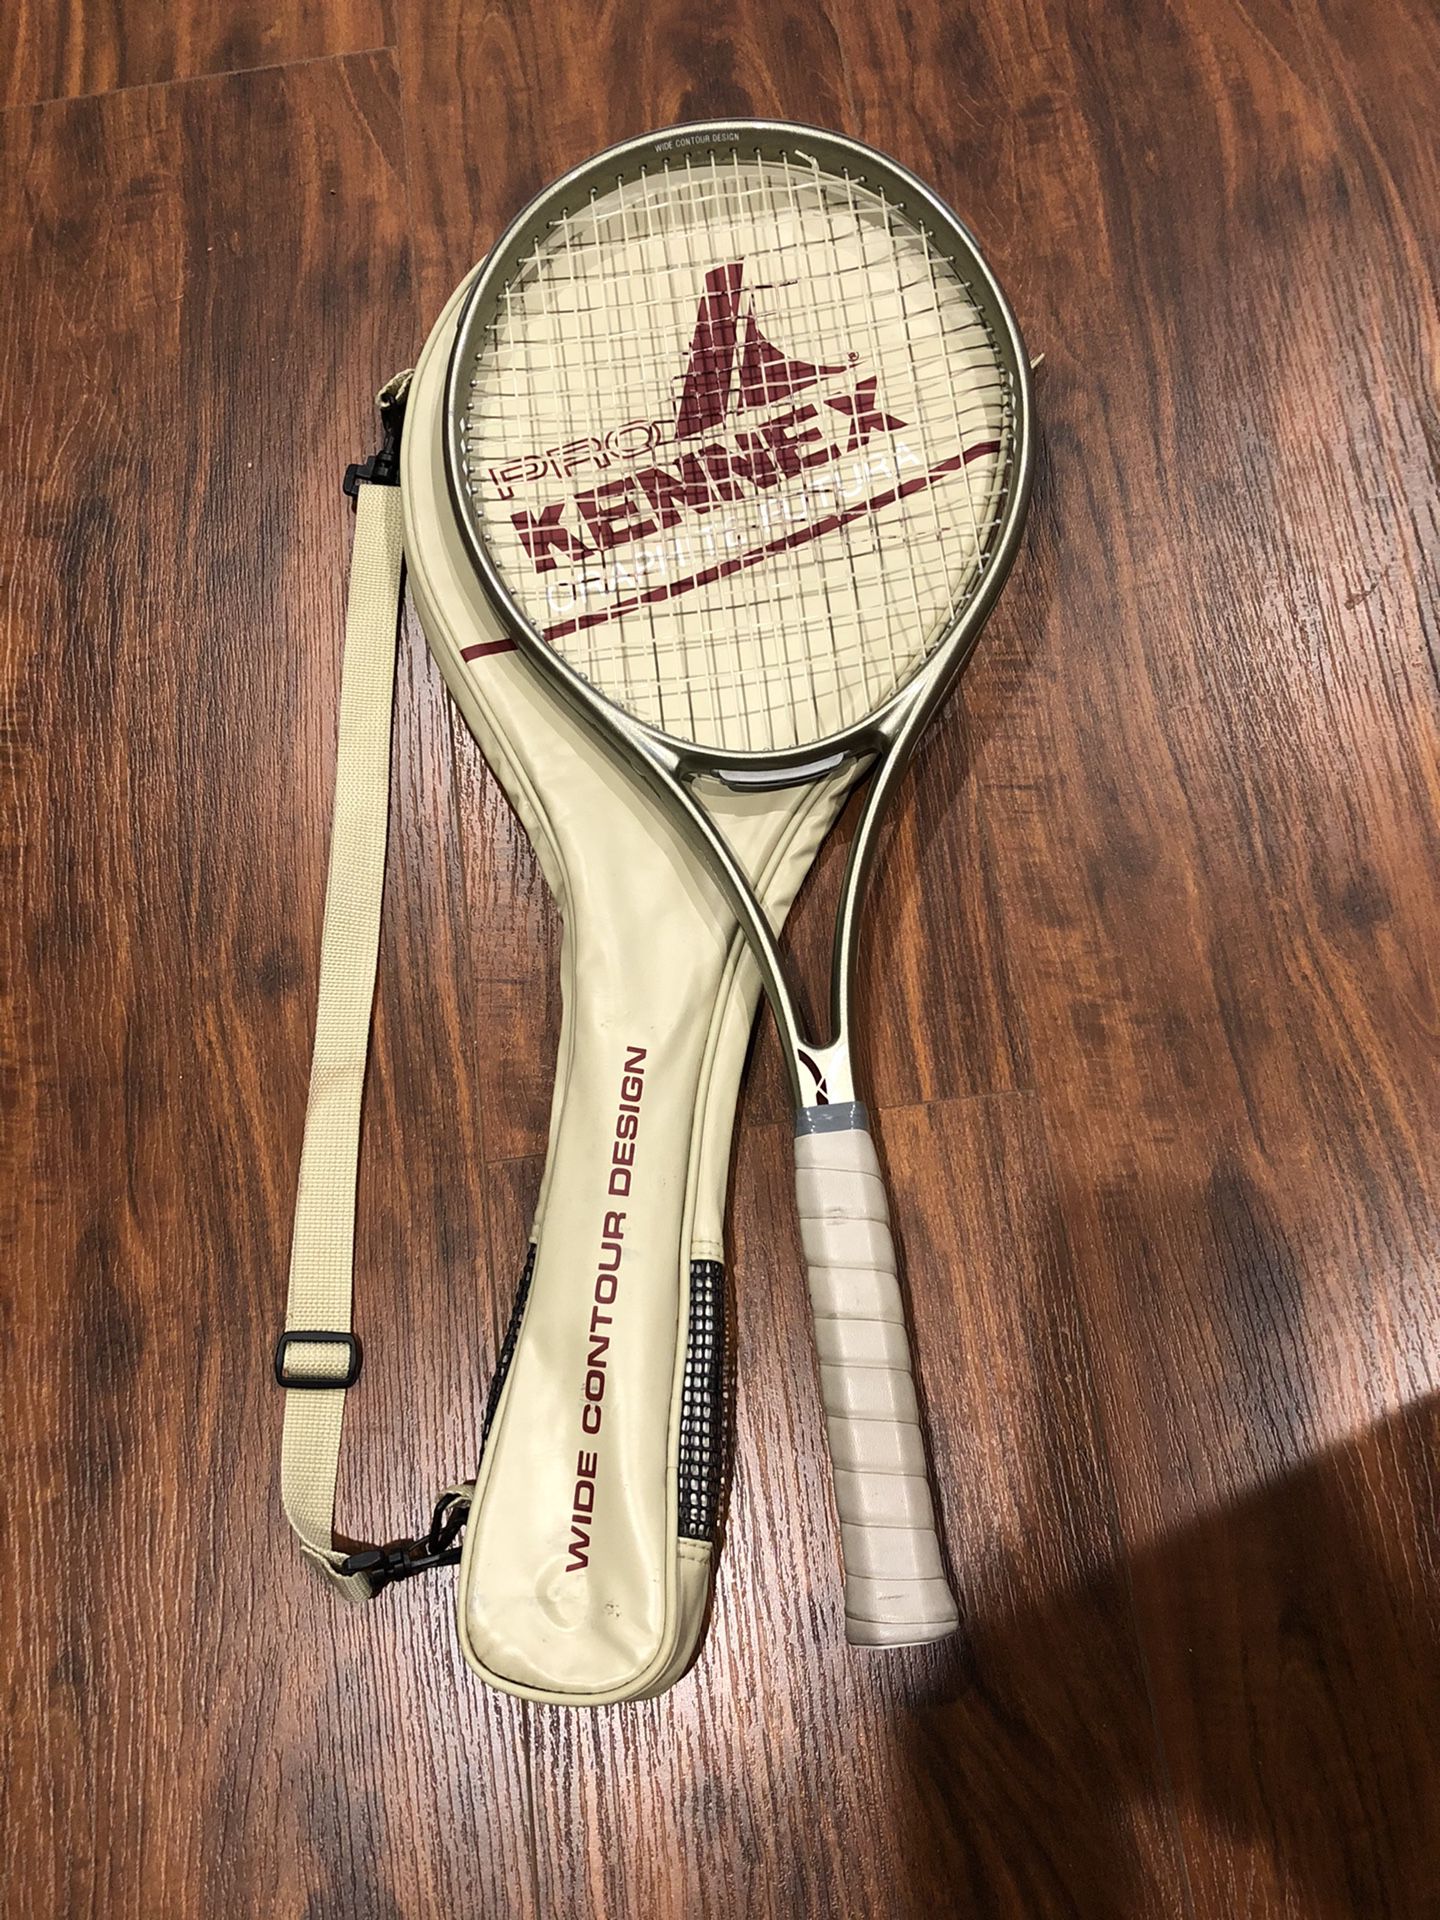 Kennex Pro Graphite Futura Tennis Racket